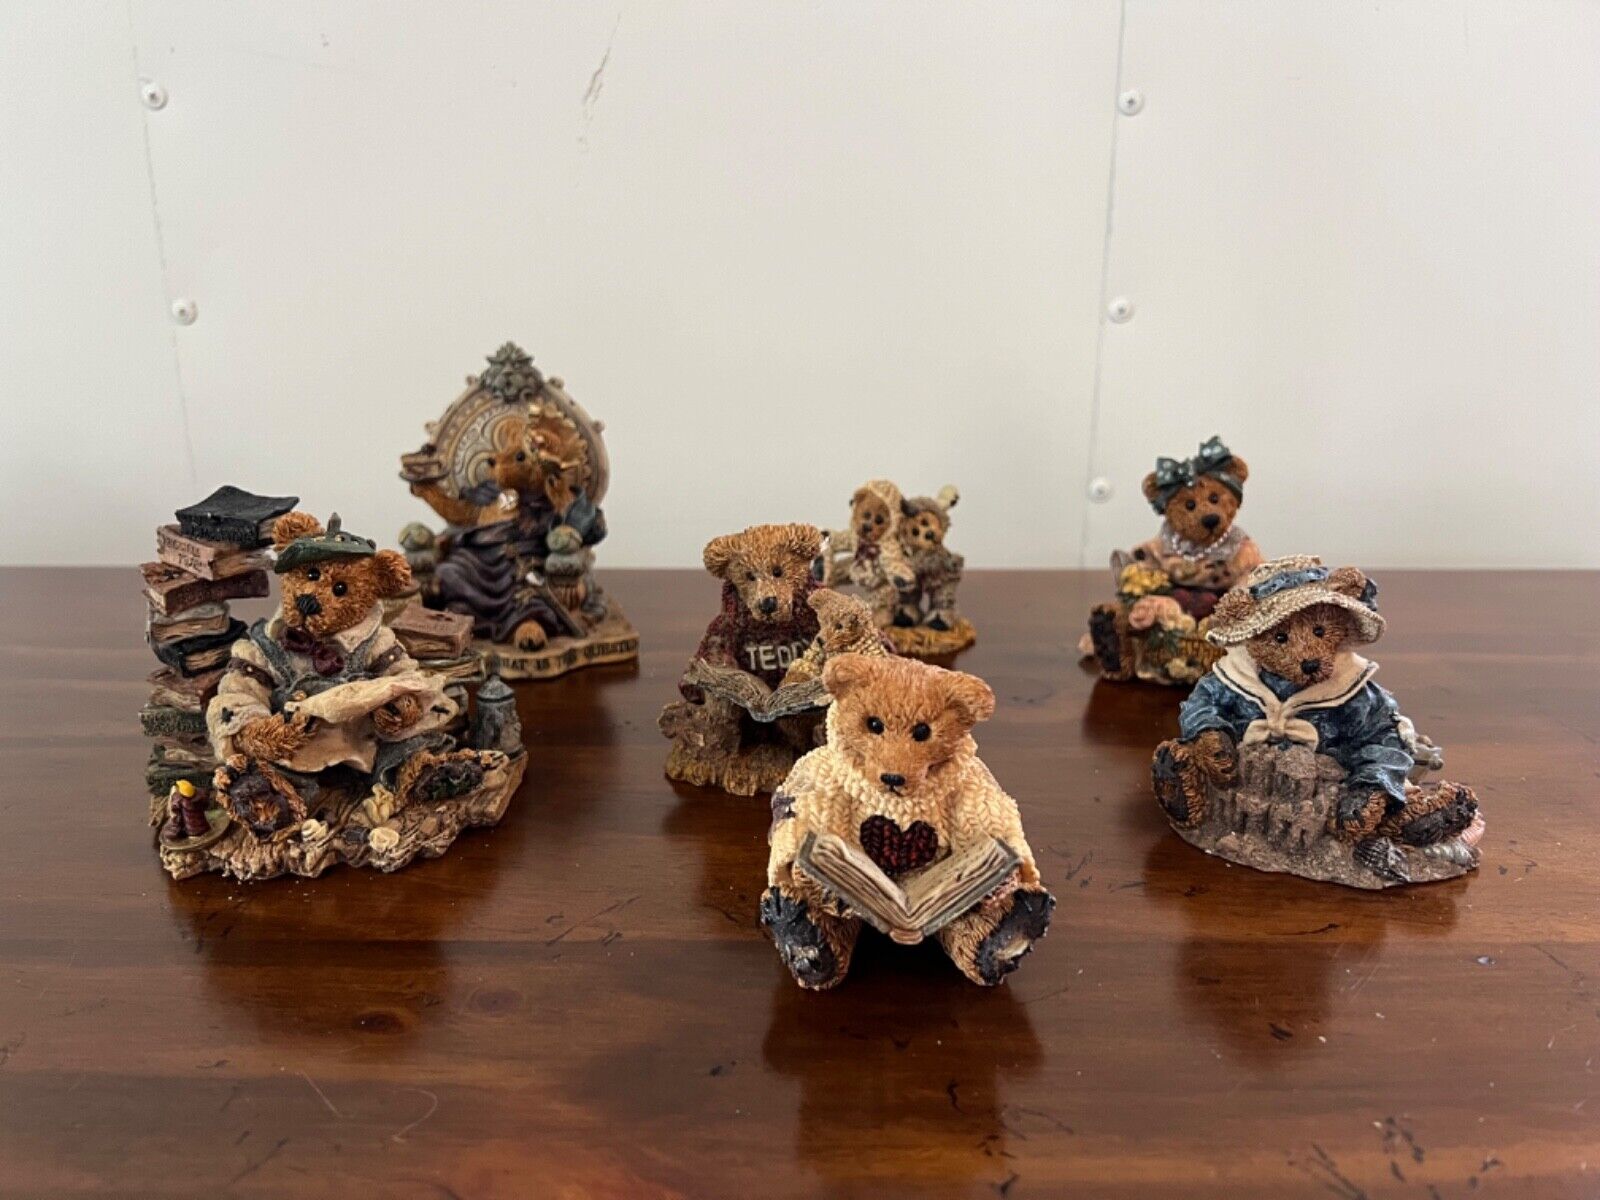 VTG Lot of 7 Boyds Bears & Friends Figurines See Listing Details For Description